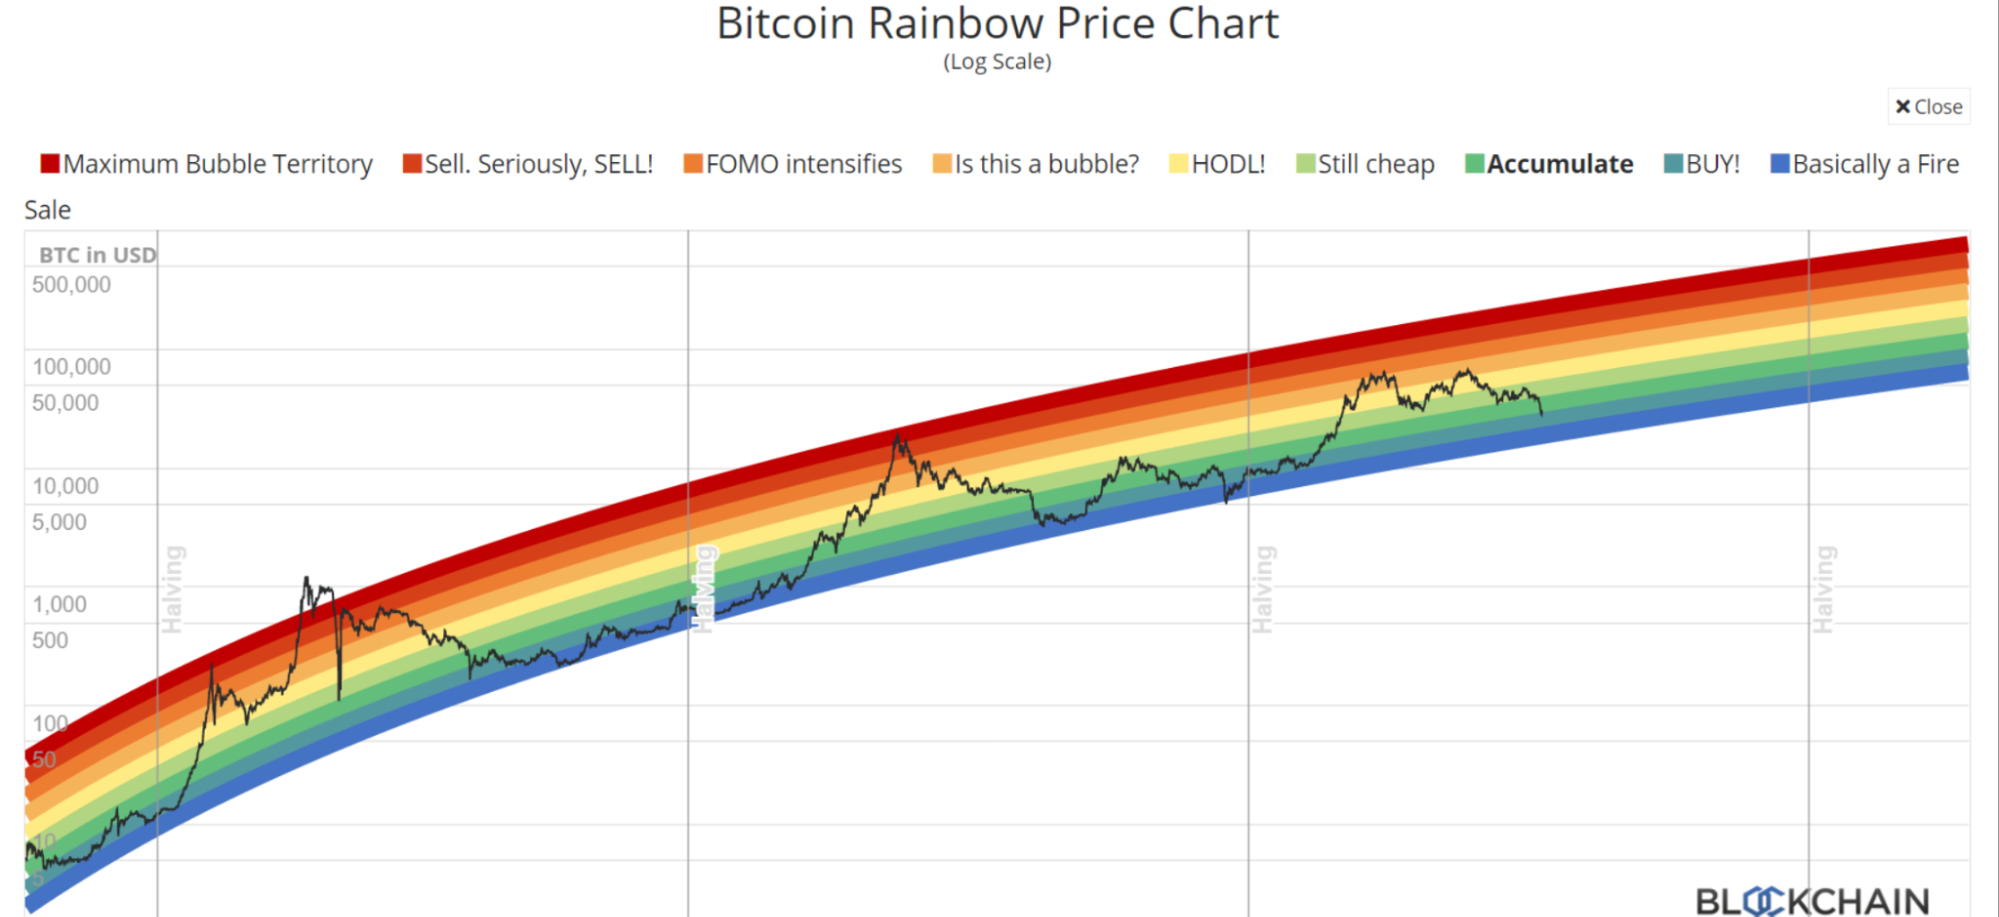 Bitcoin rainbow chart on weekly timeframe